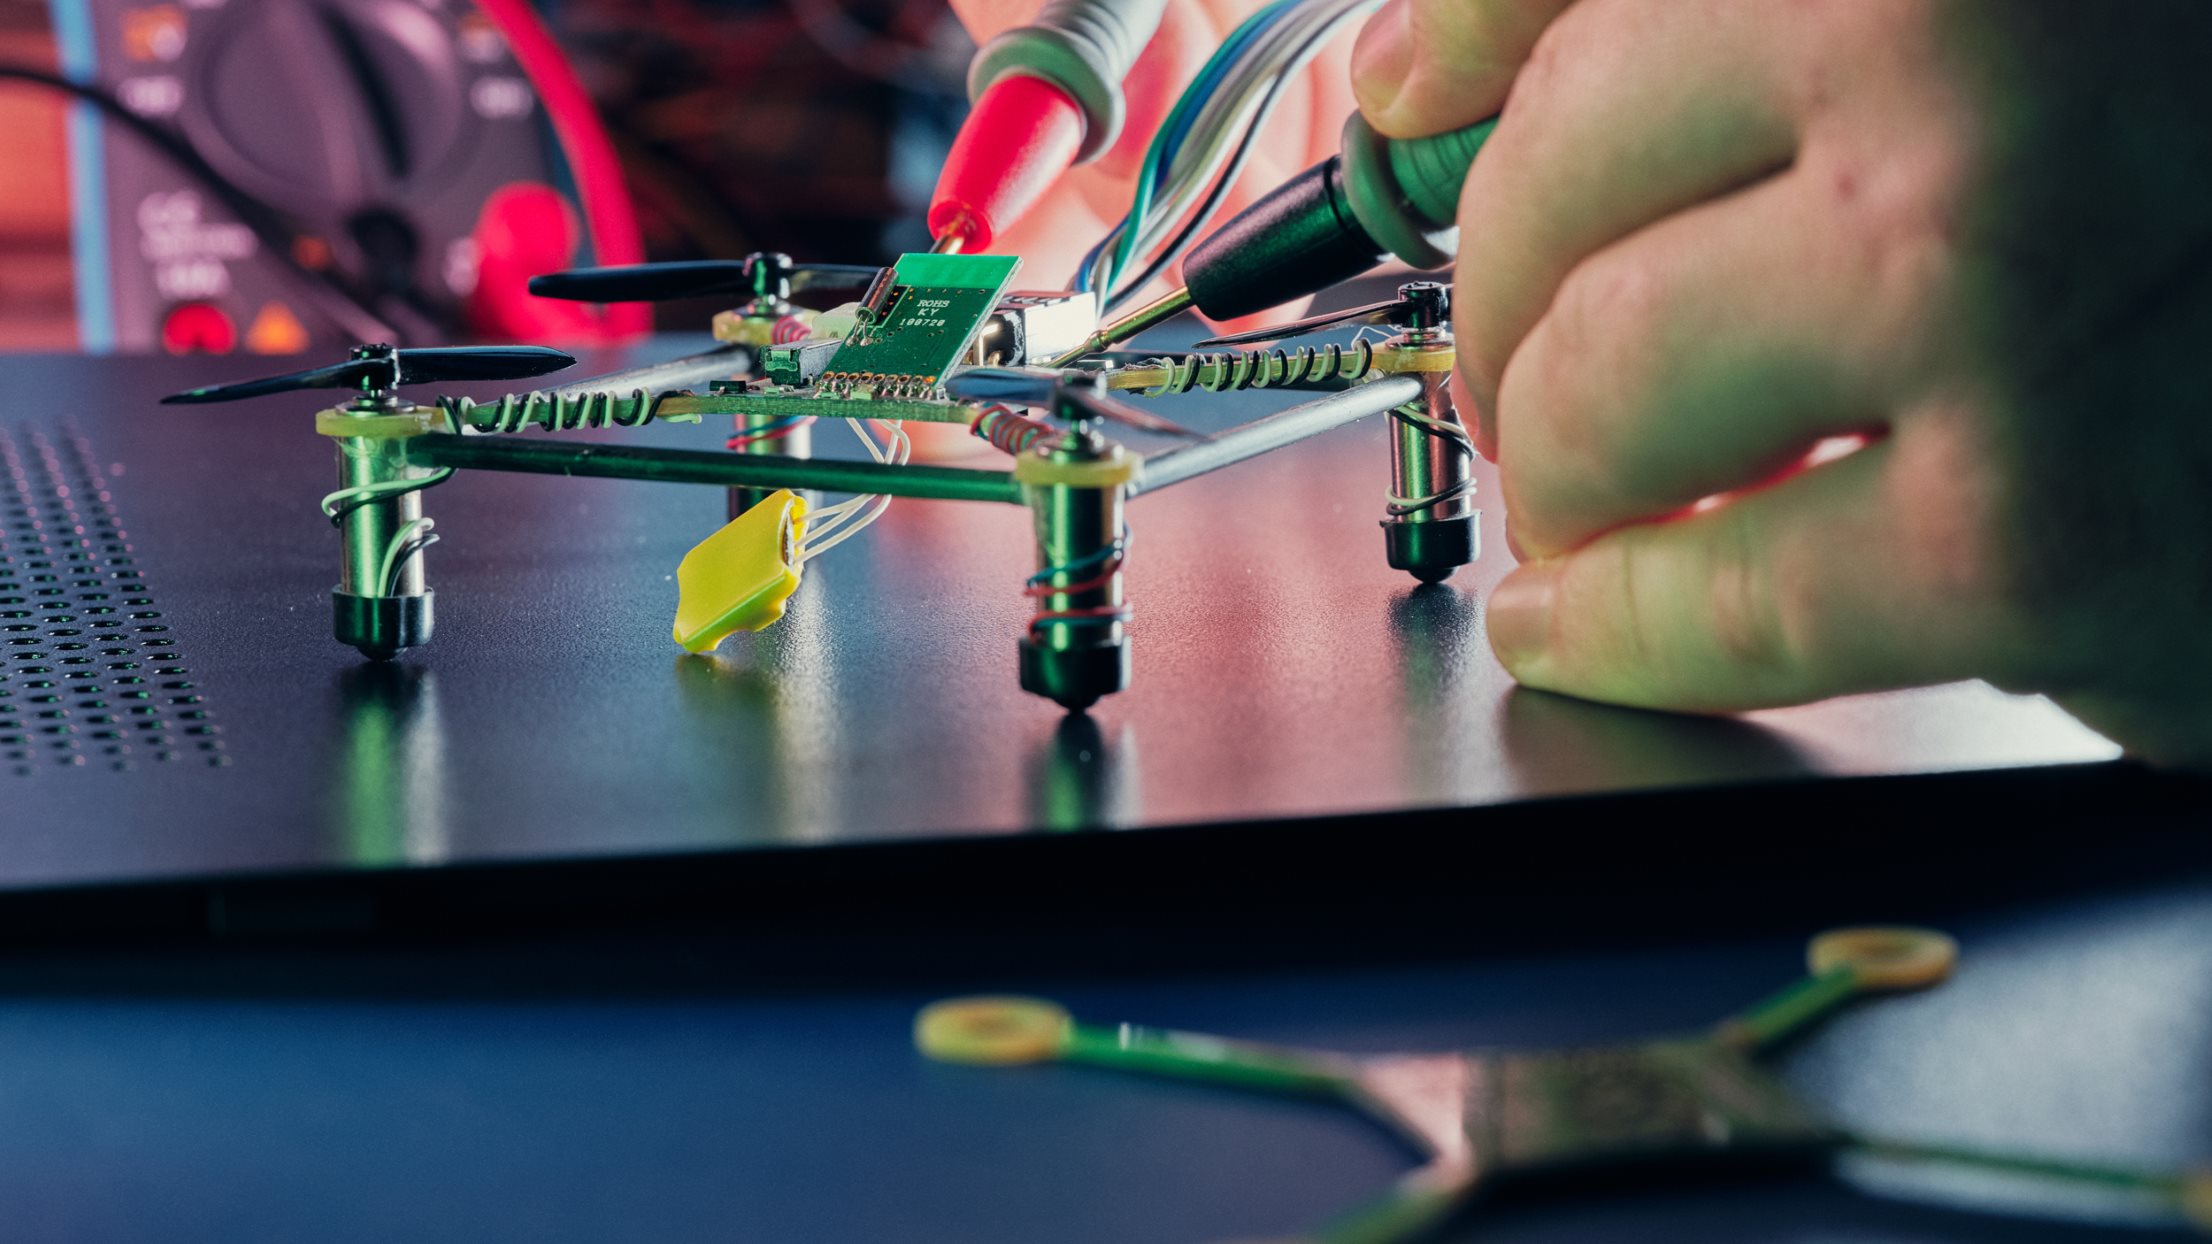 The quadrocopter's PCBA testing process